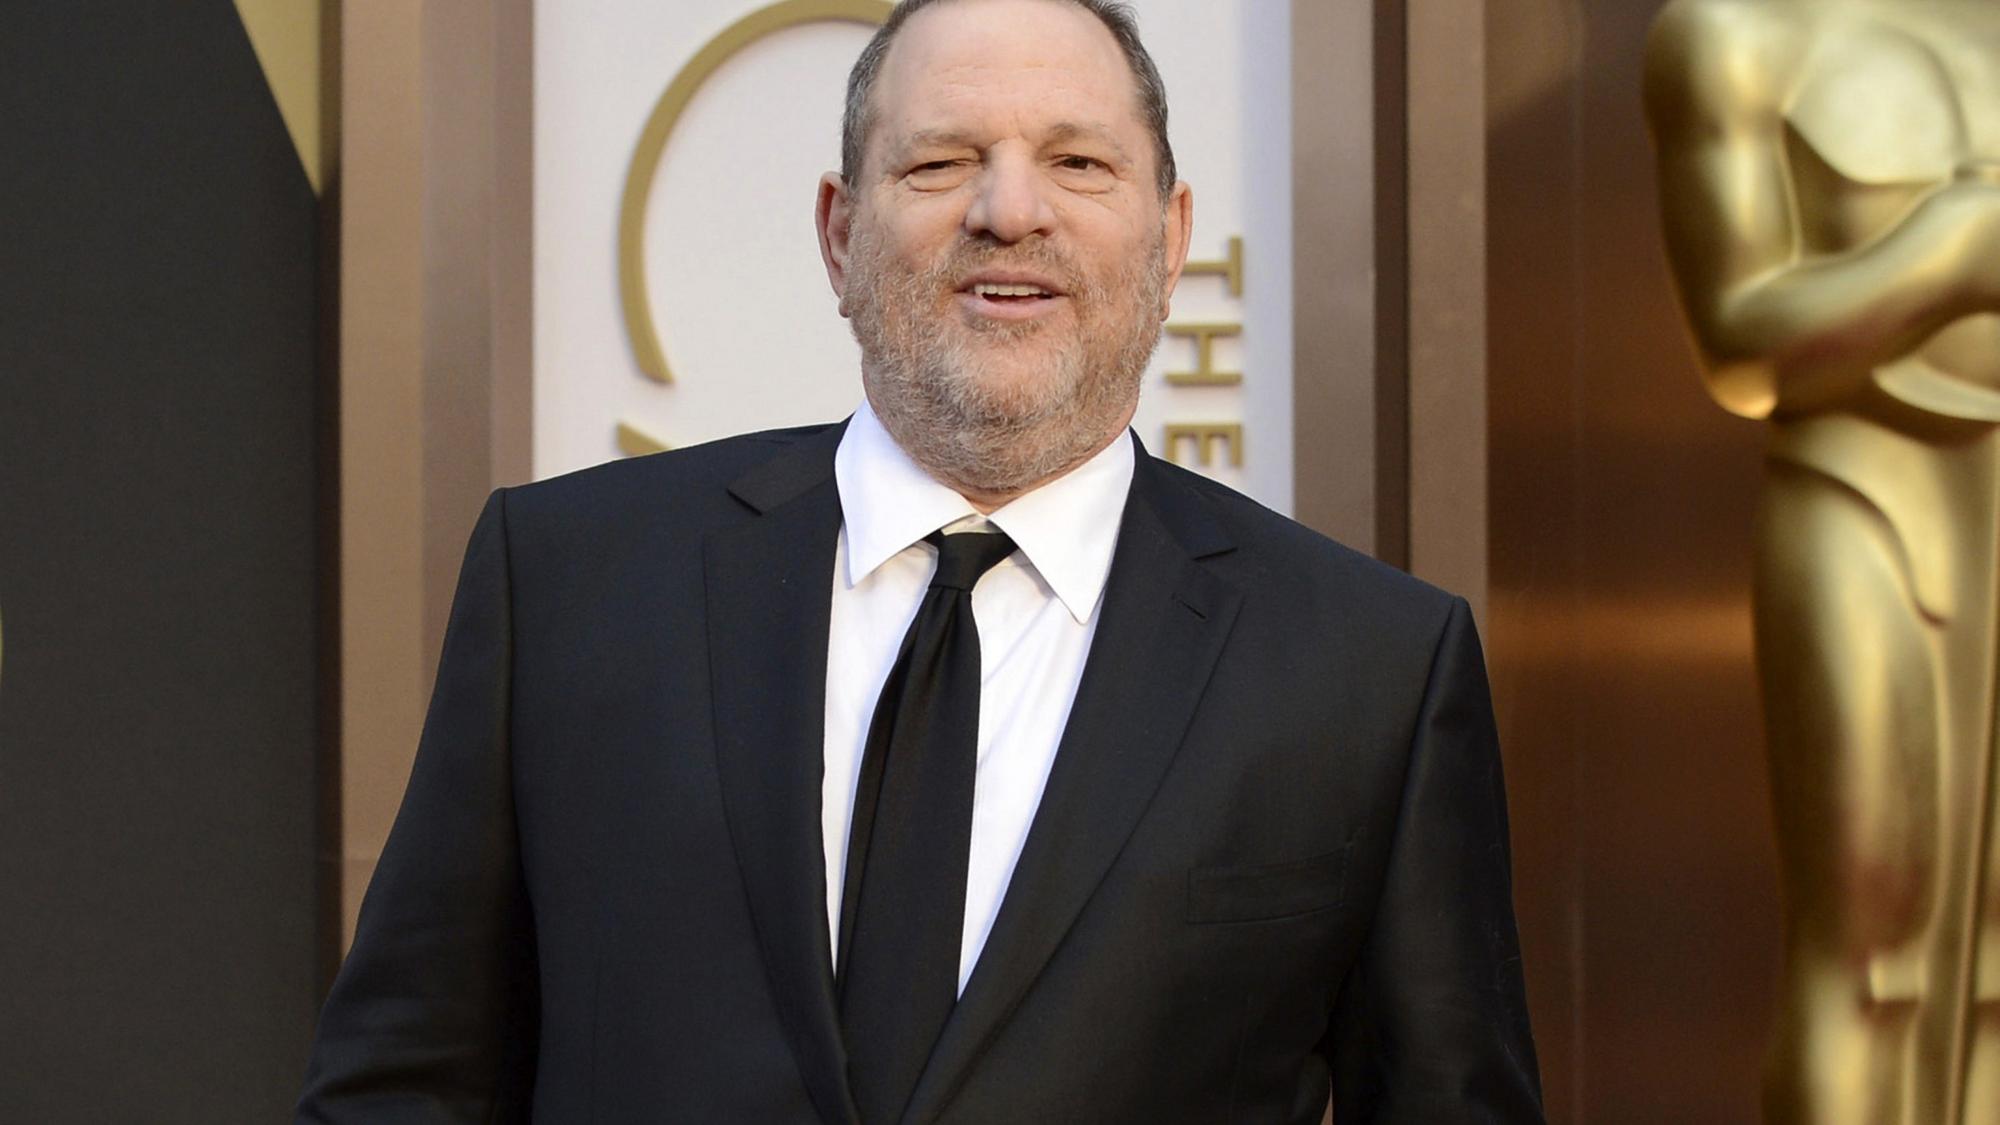 Hollywoodskemu producentovi Harveymu Weinsteinovi zrušili rozsudok z roku 2020.